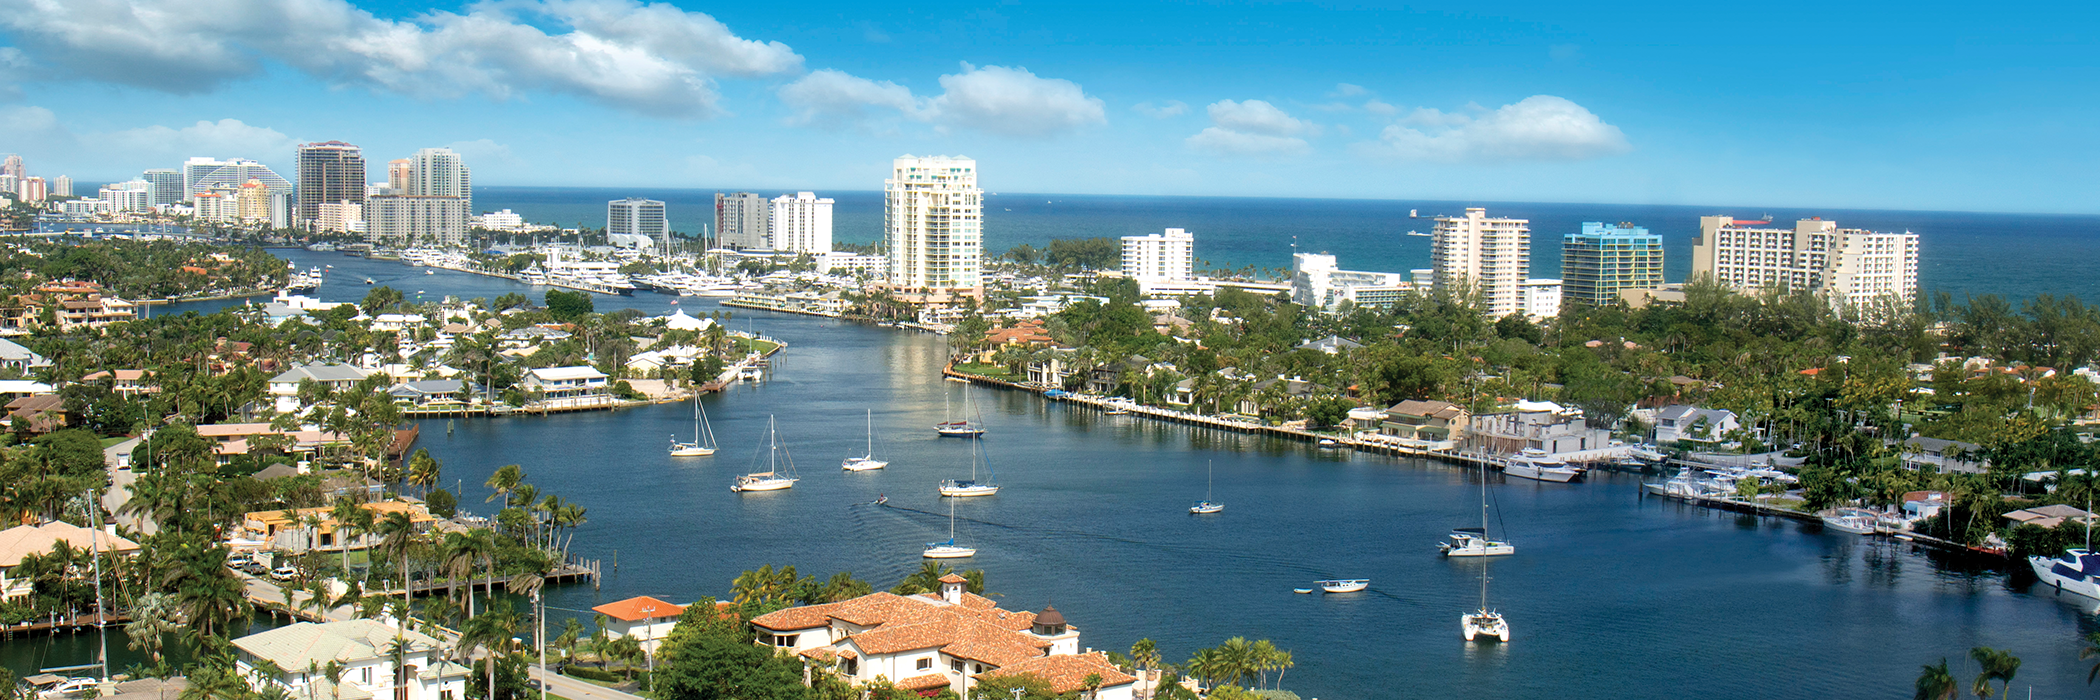 Aerial view of Fort Lauderdale, FL